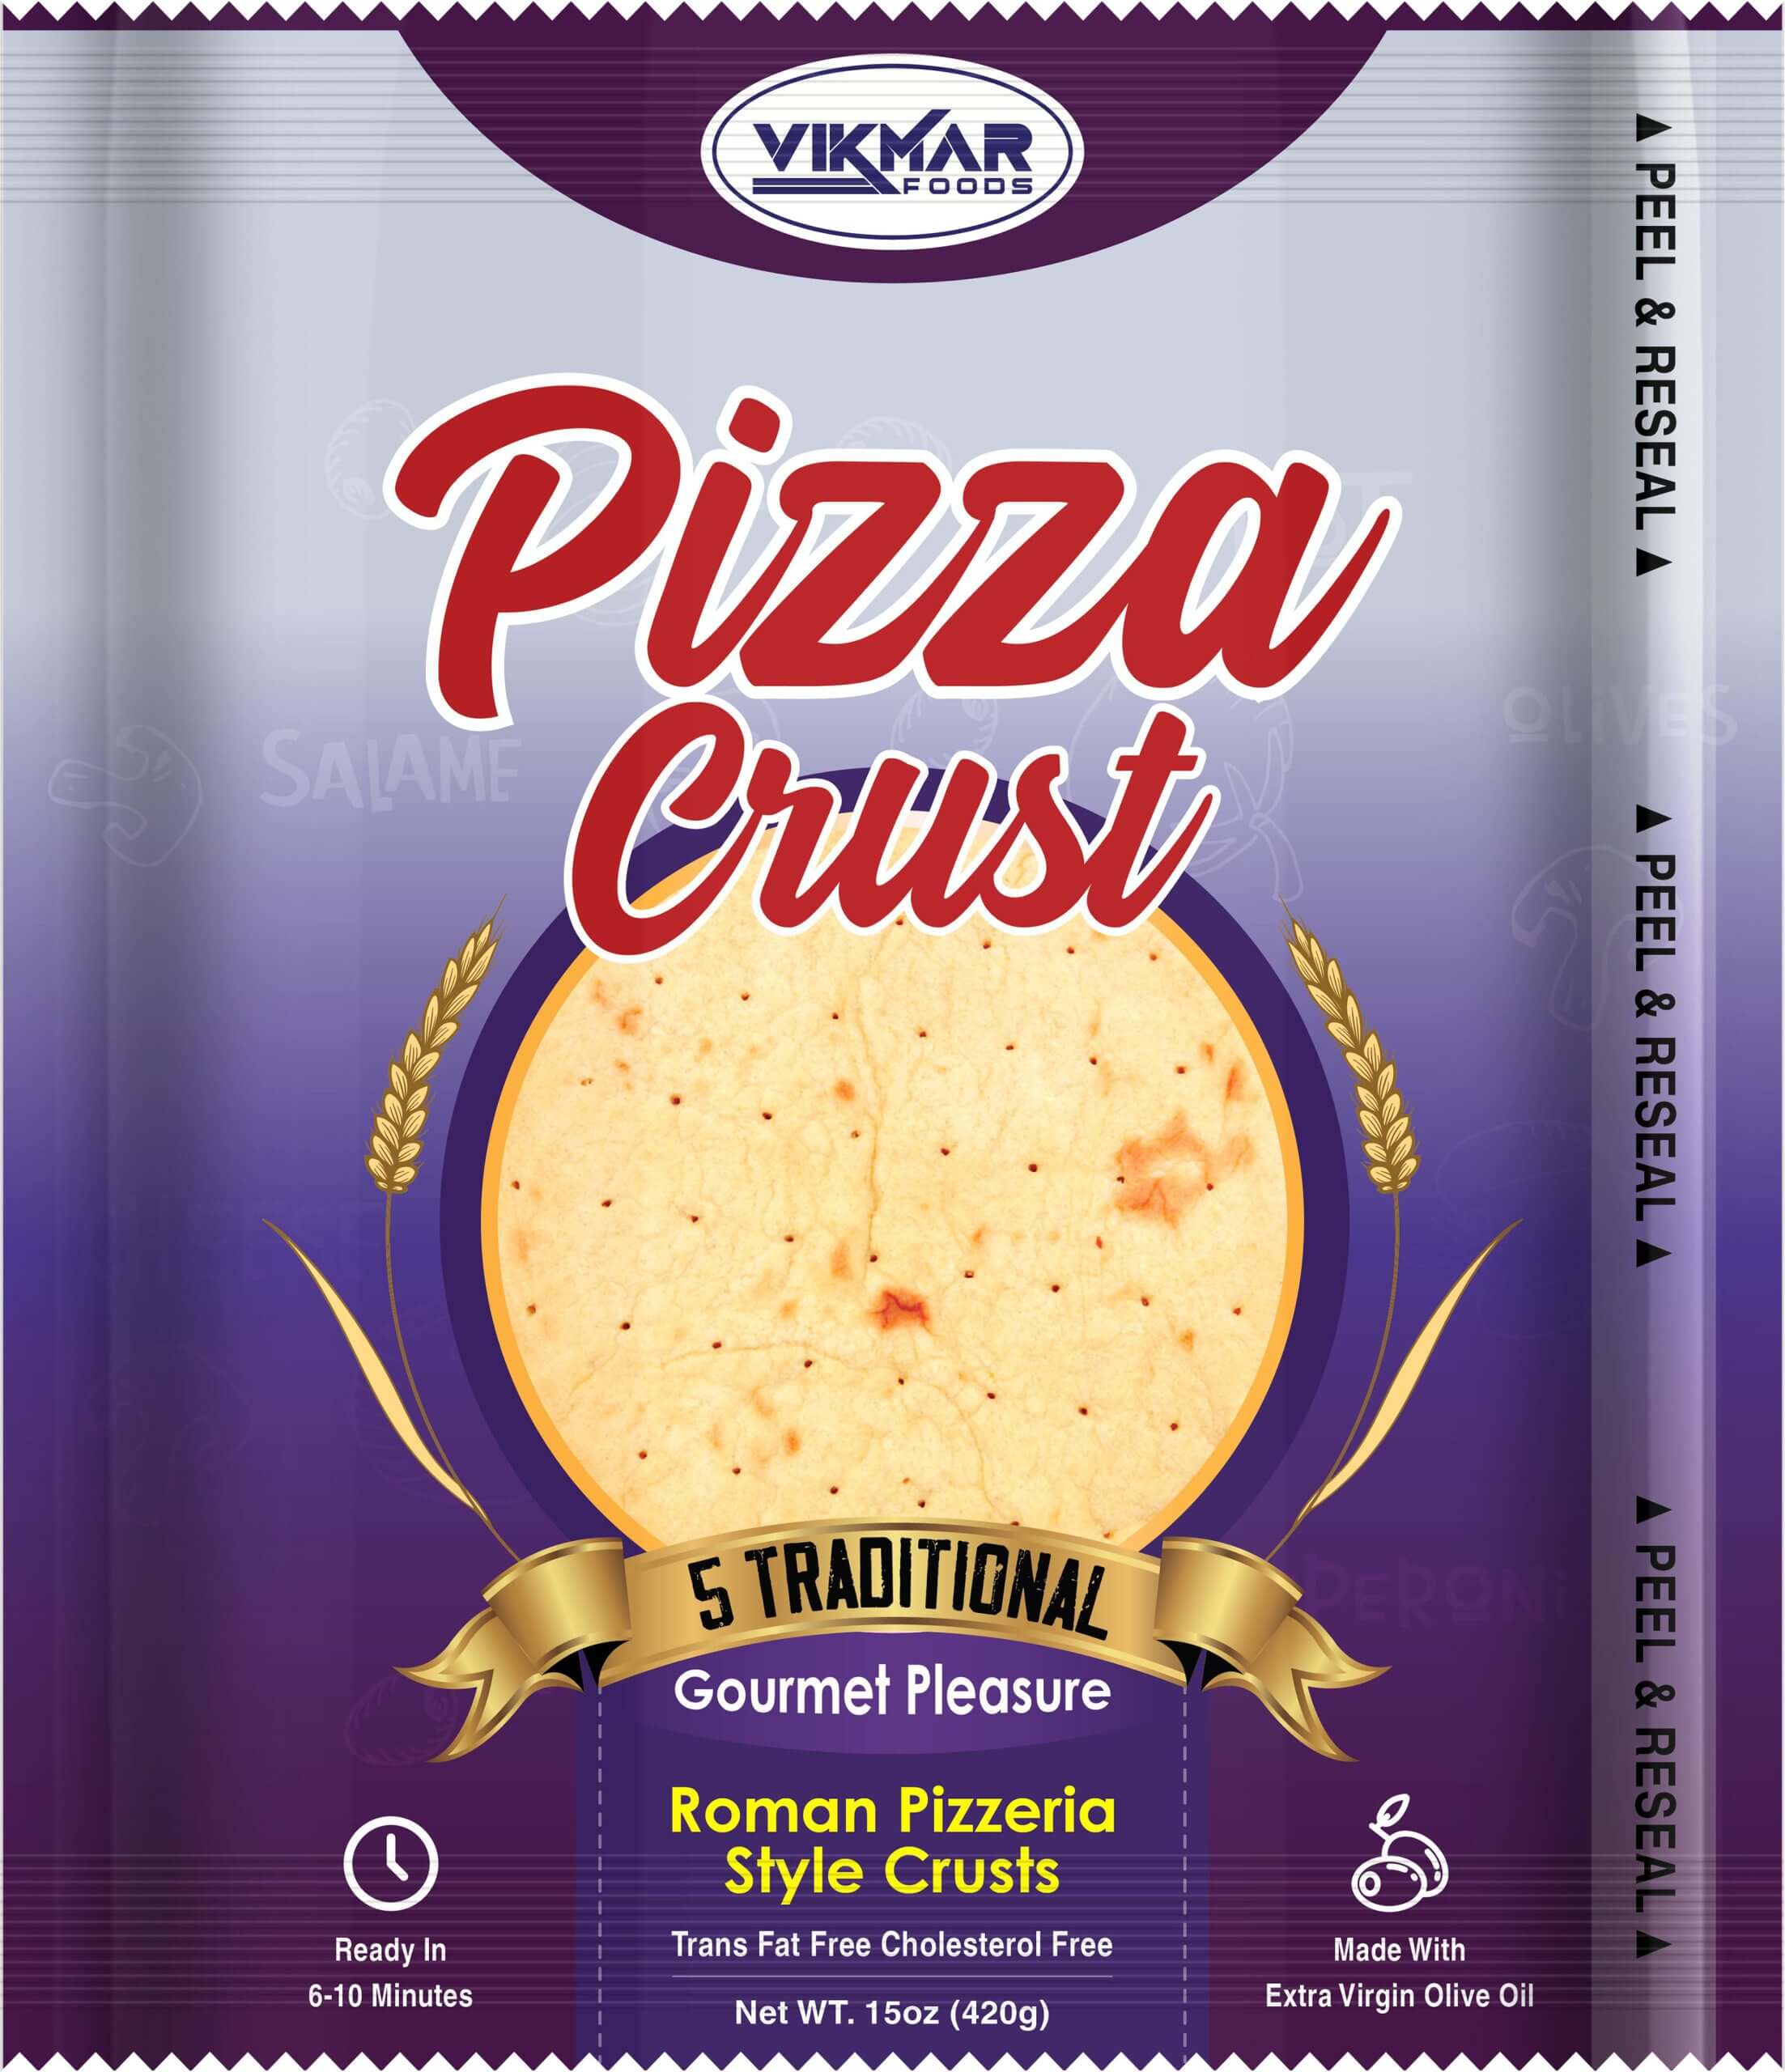 Pizza crust 5 tradational